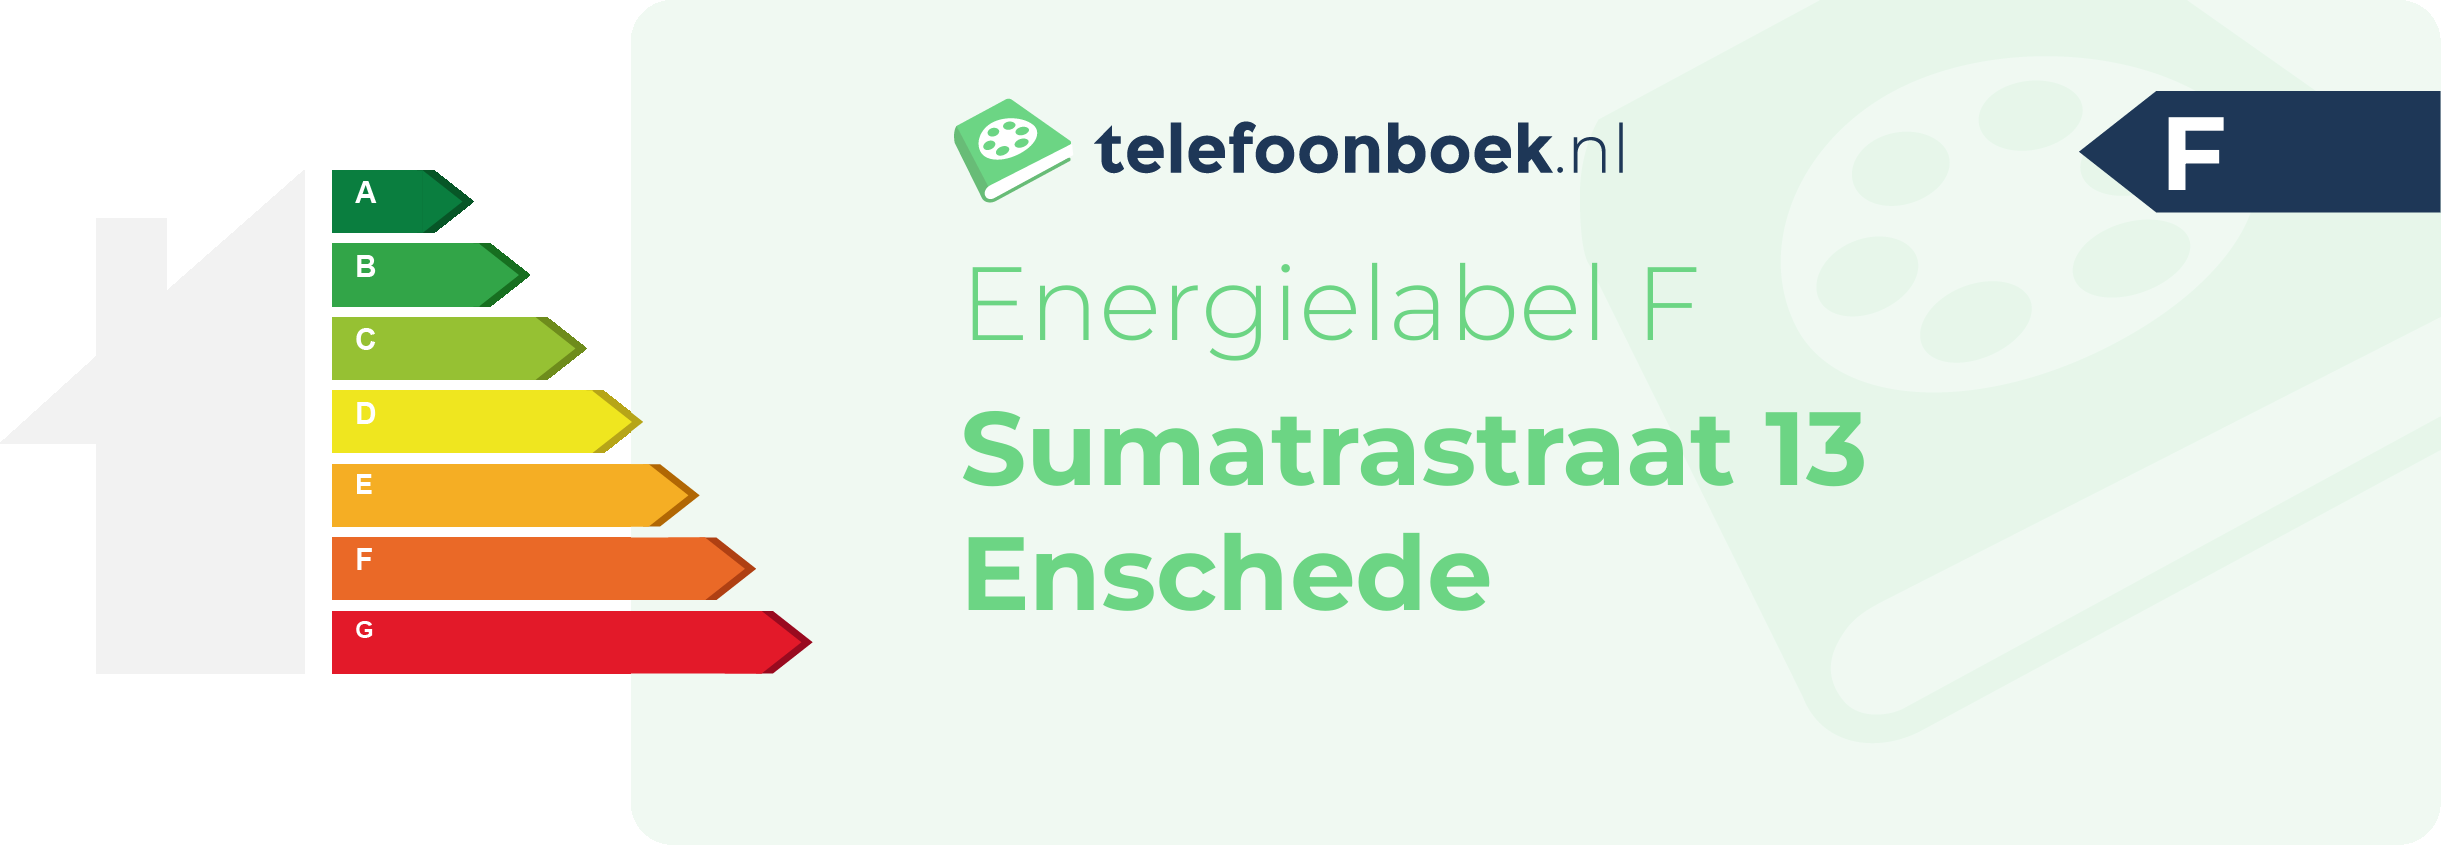 Energielabel Sumatrastraat 13 Enschede